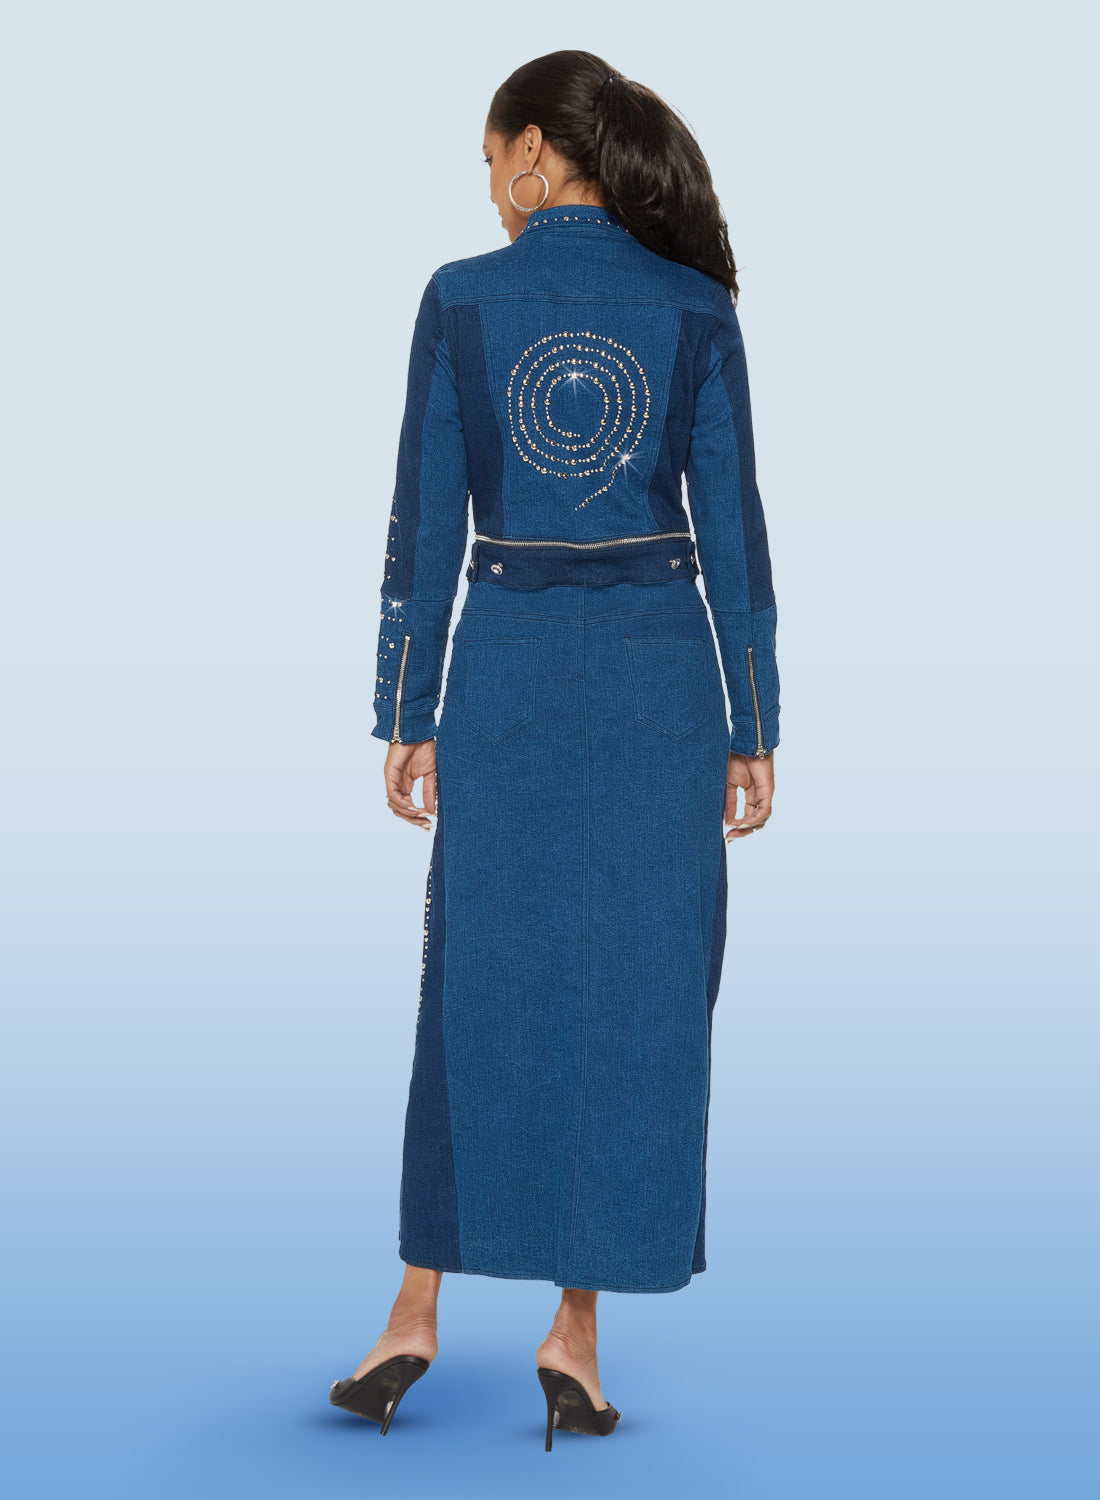 DV Jeans - 8474 - Dark Blue - Stretch Denim Rhinestone Embellished Two-tone Dress